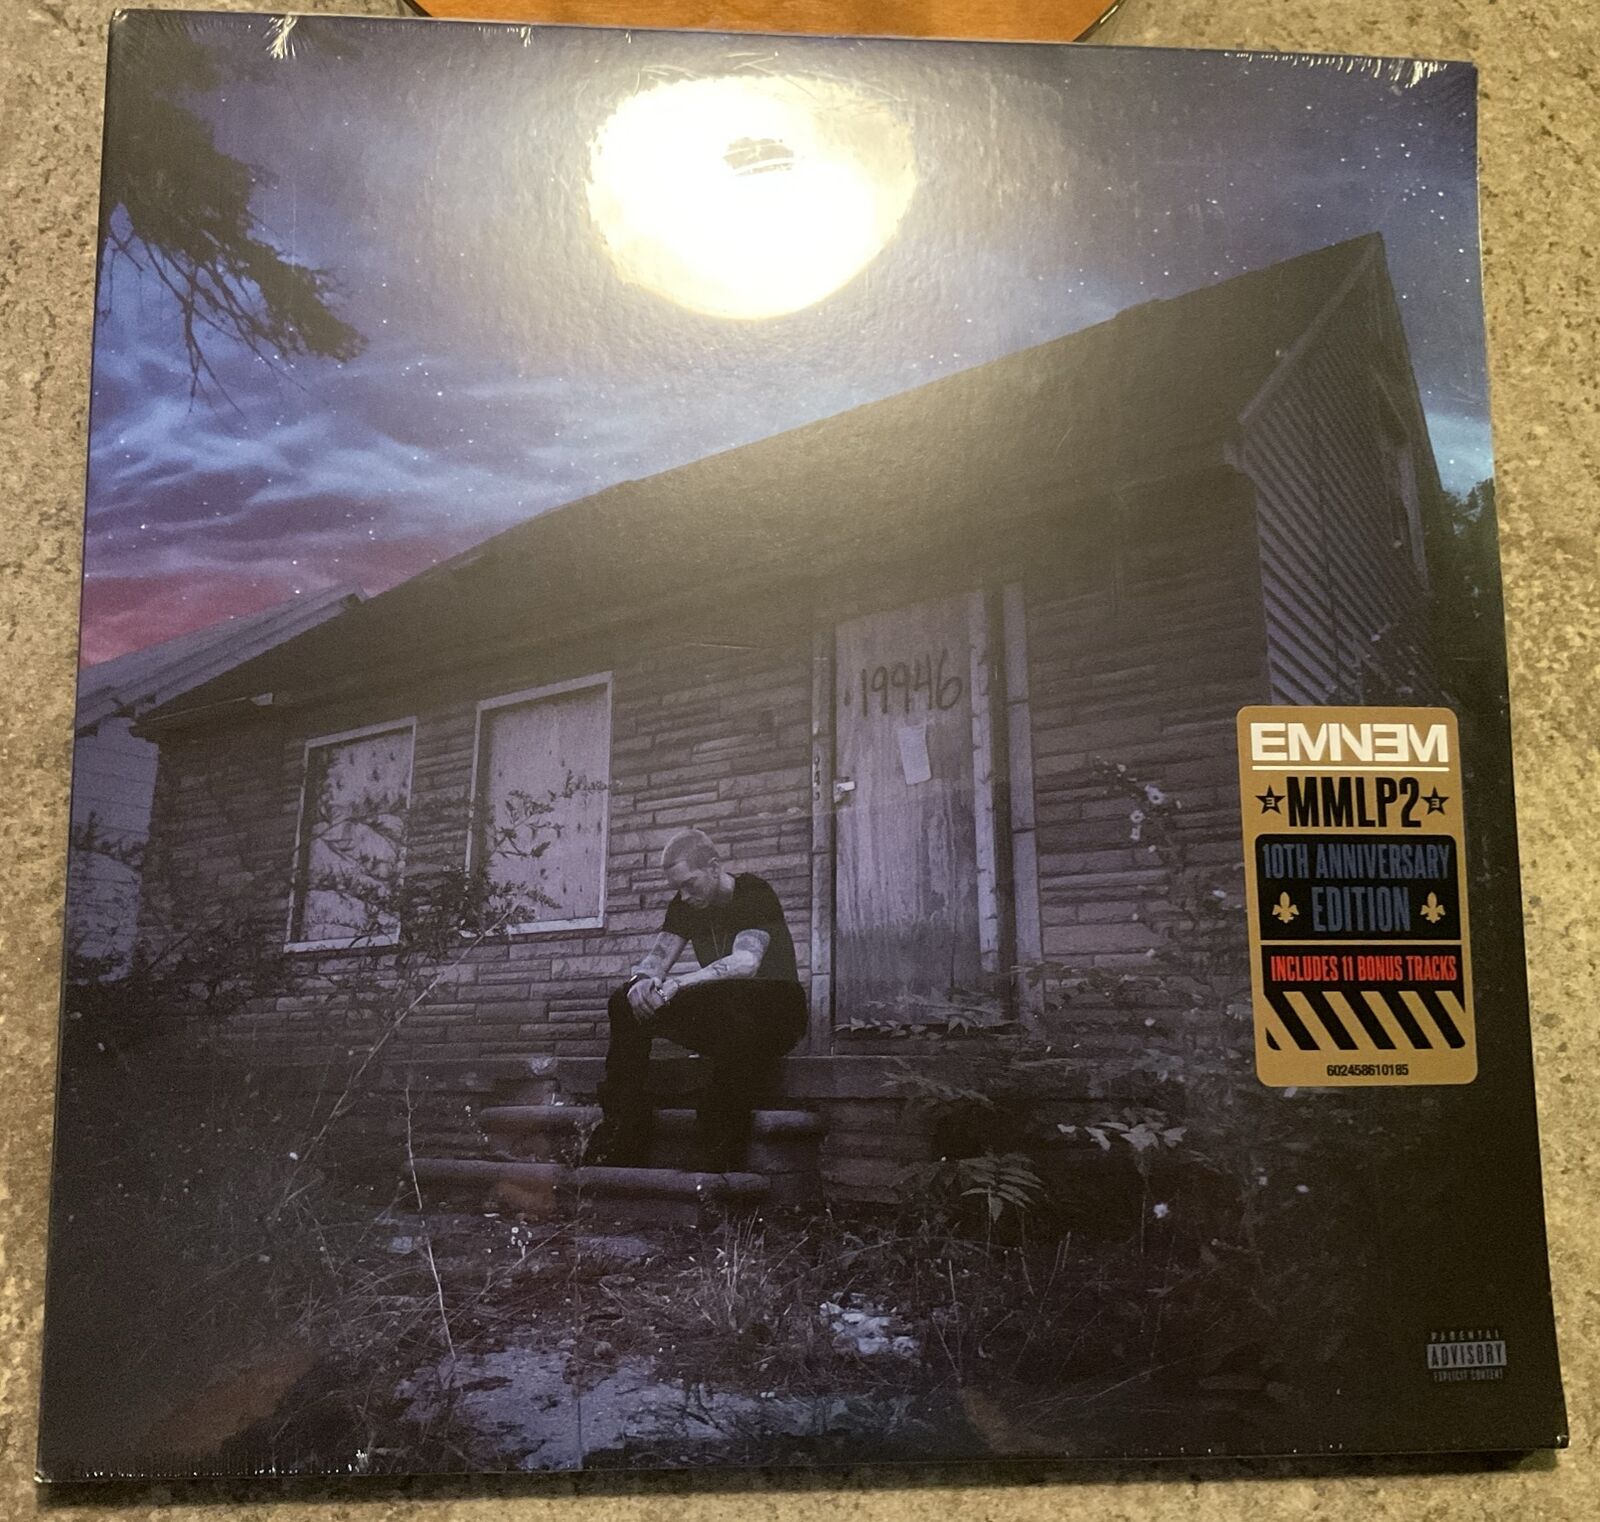 Eminem - The Marshall Mathers LP2 (10th Anniversary Edition) [New Vinyl- Sealed